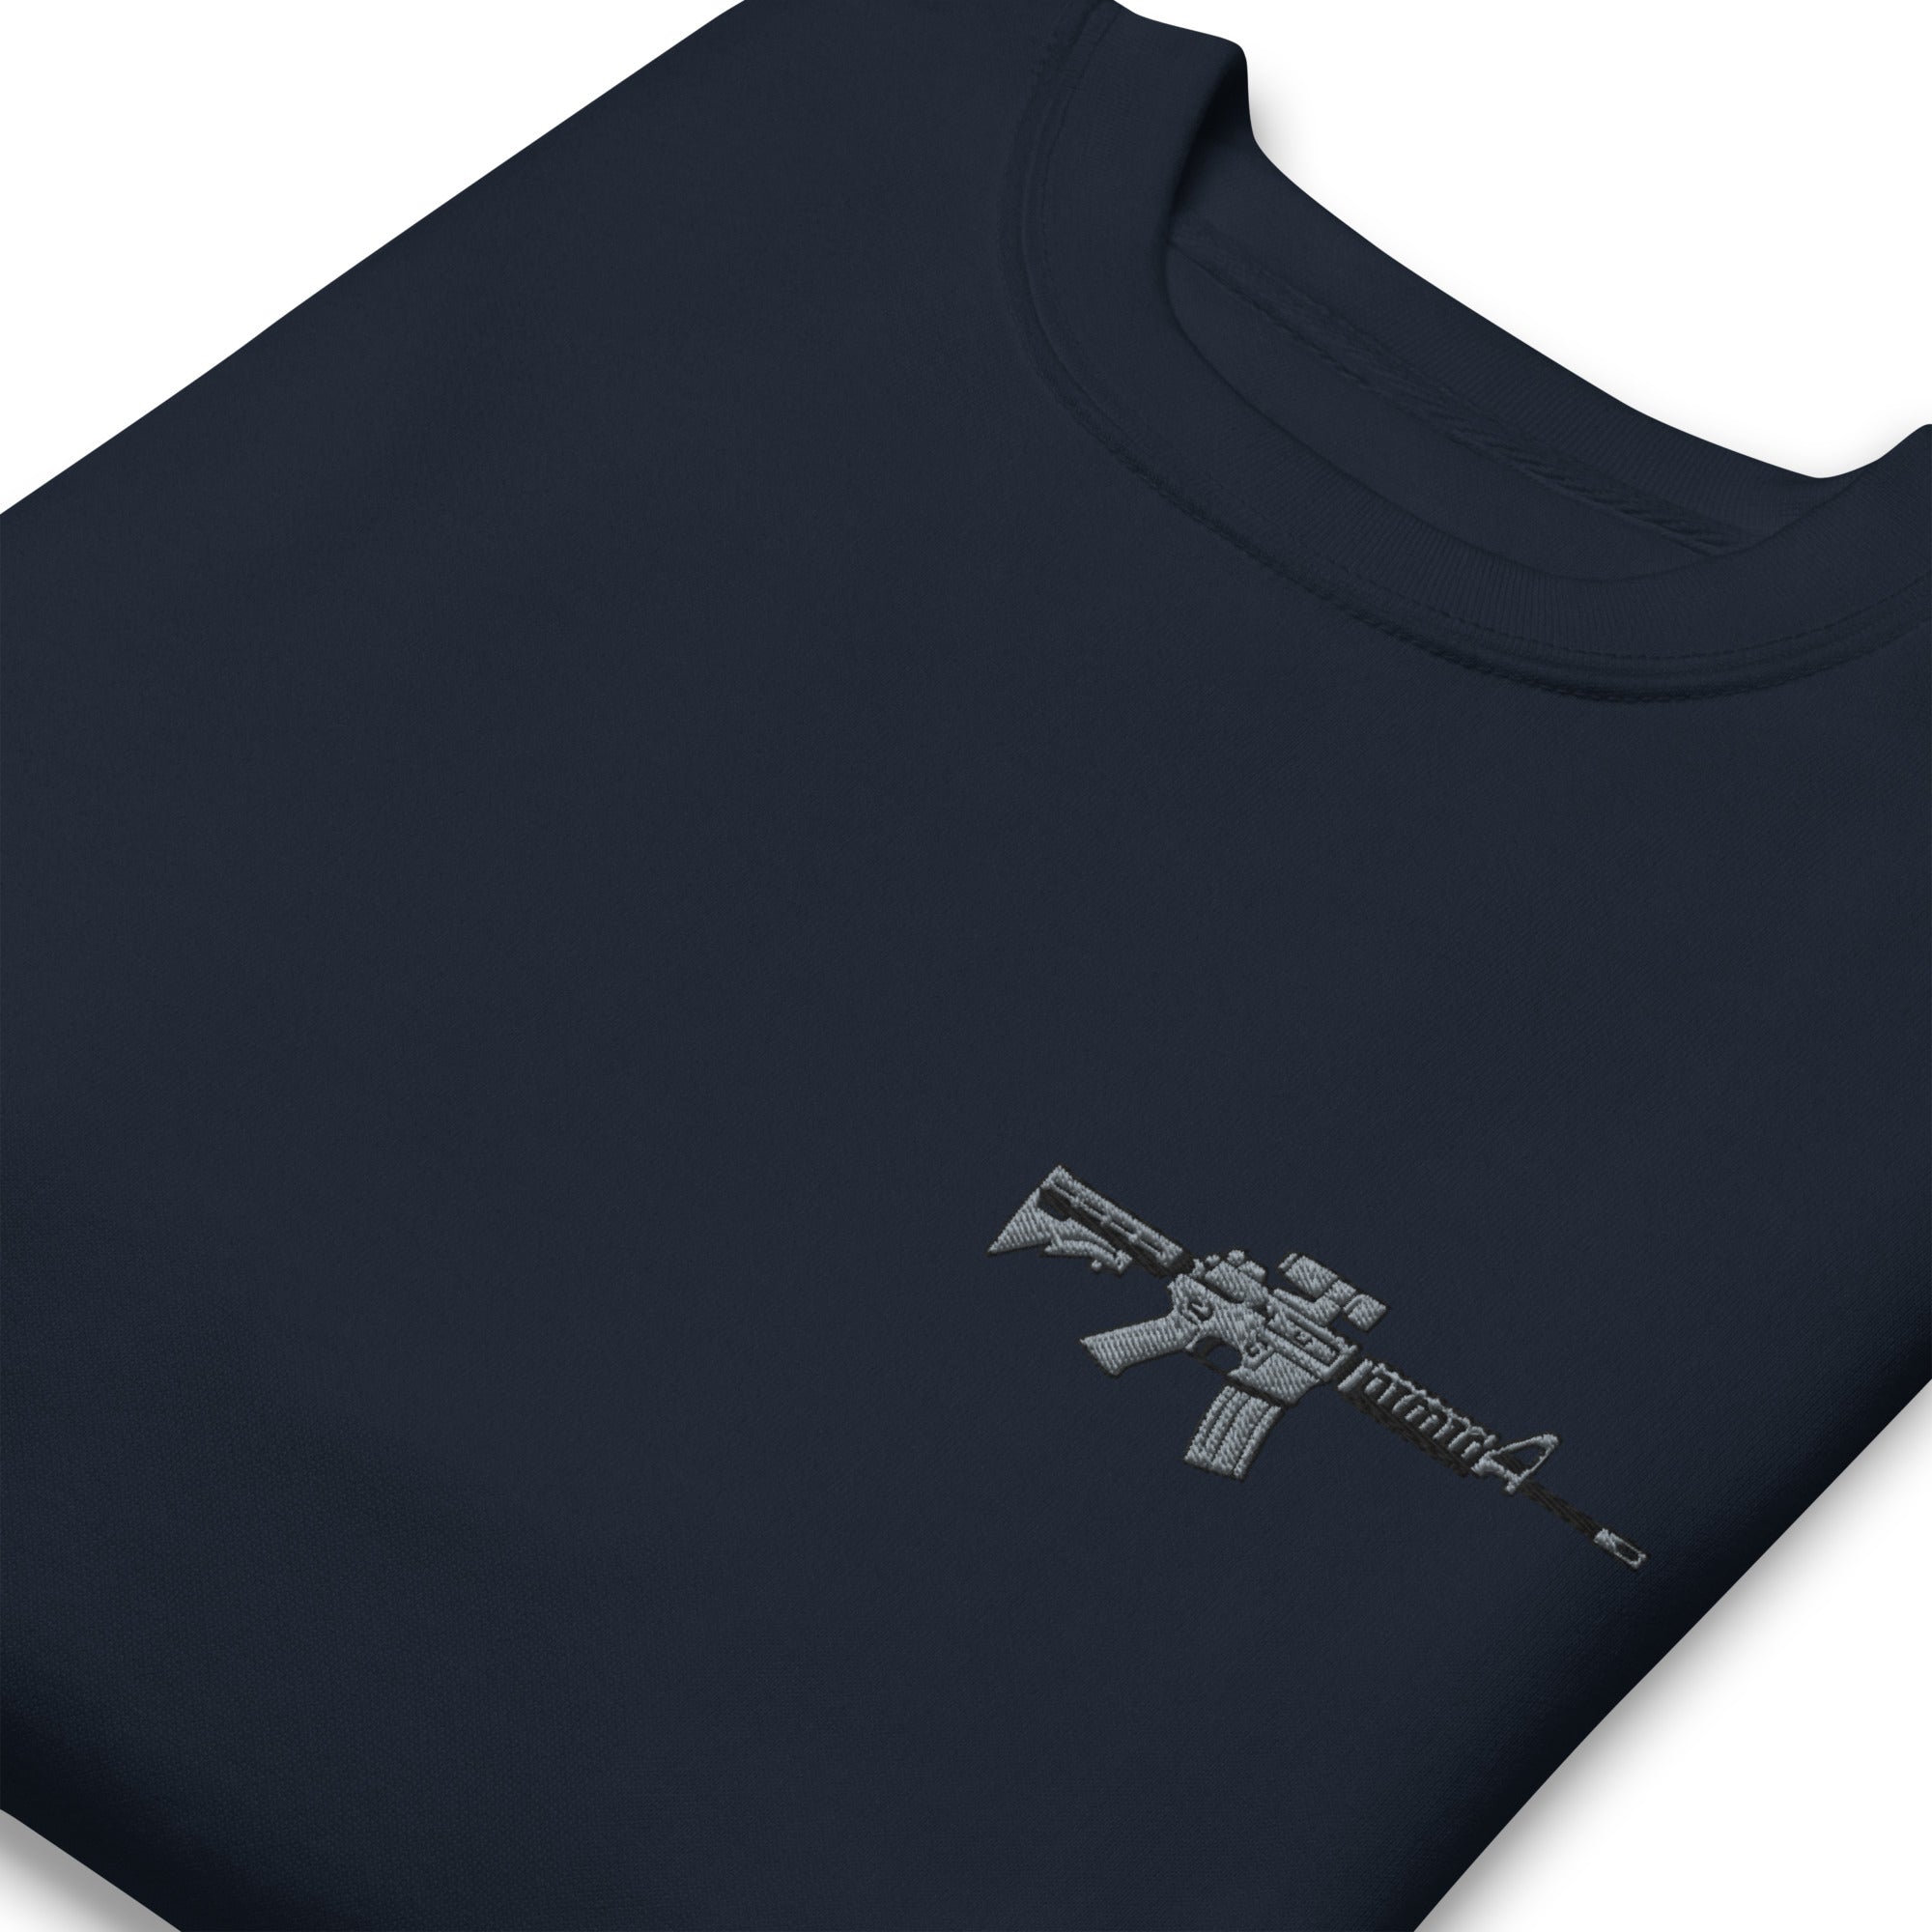 AR-15 Embroidered Crewneck Sweatshirt